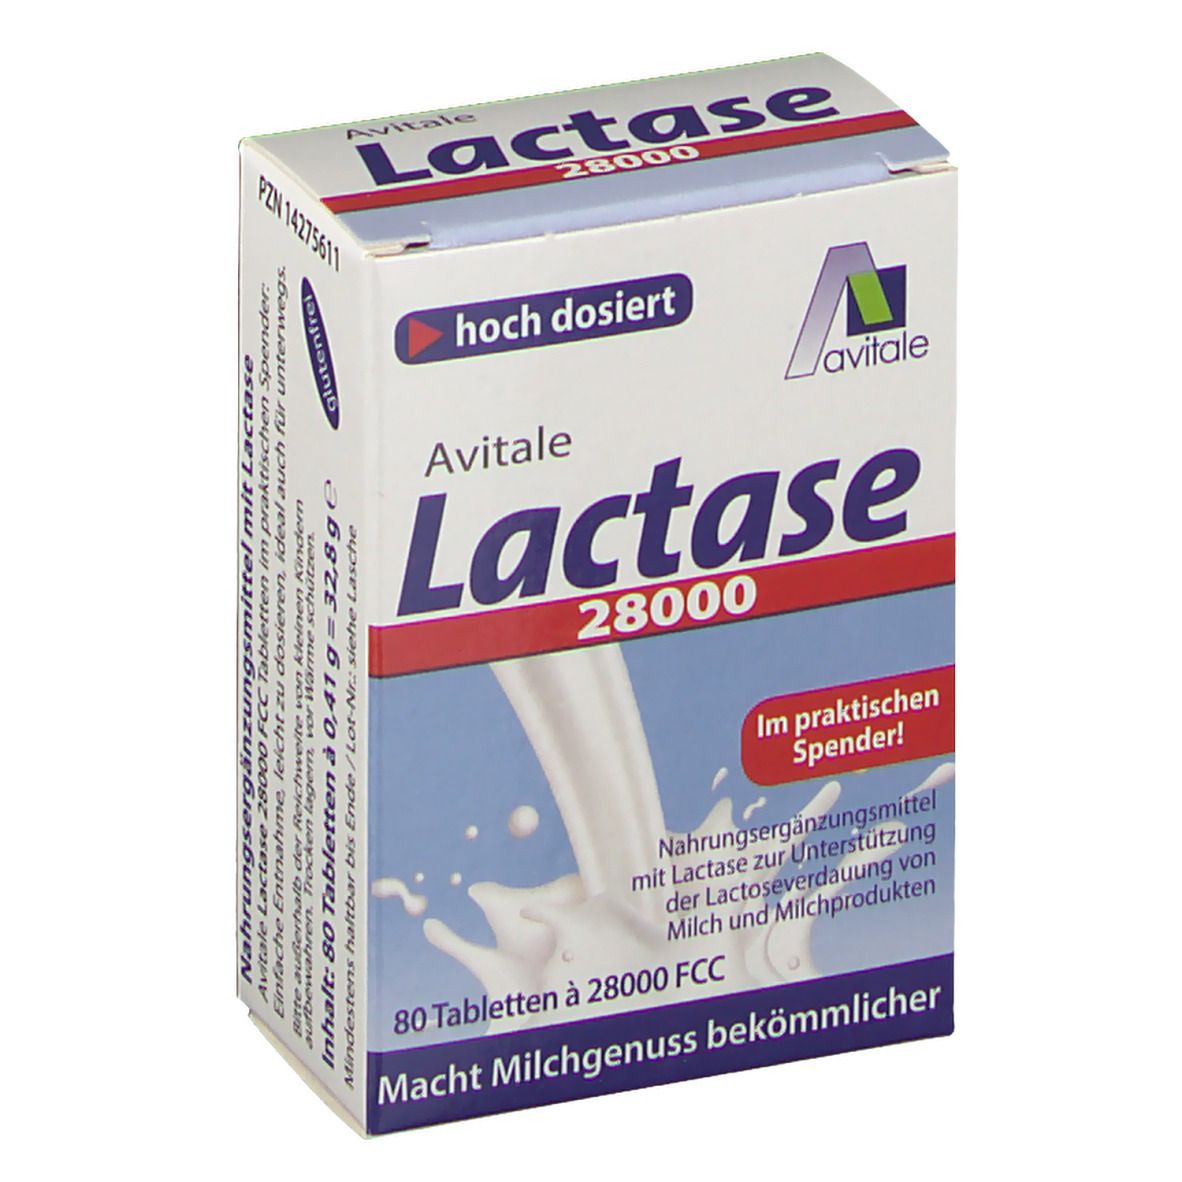 Image of Avitale Lactase 28000 FCC